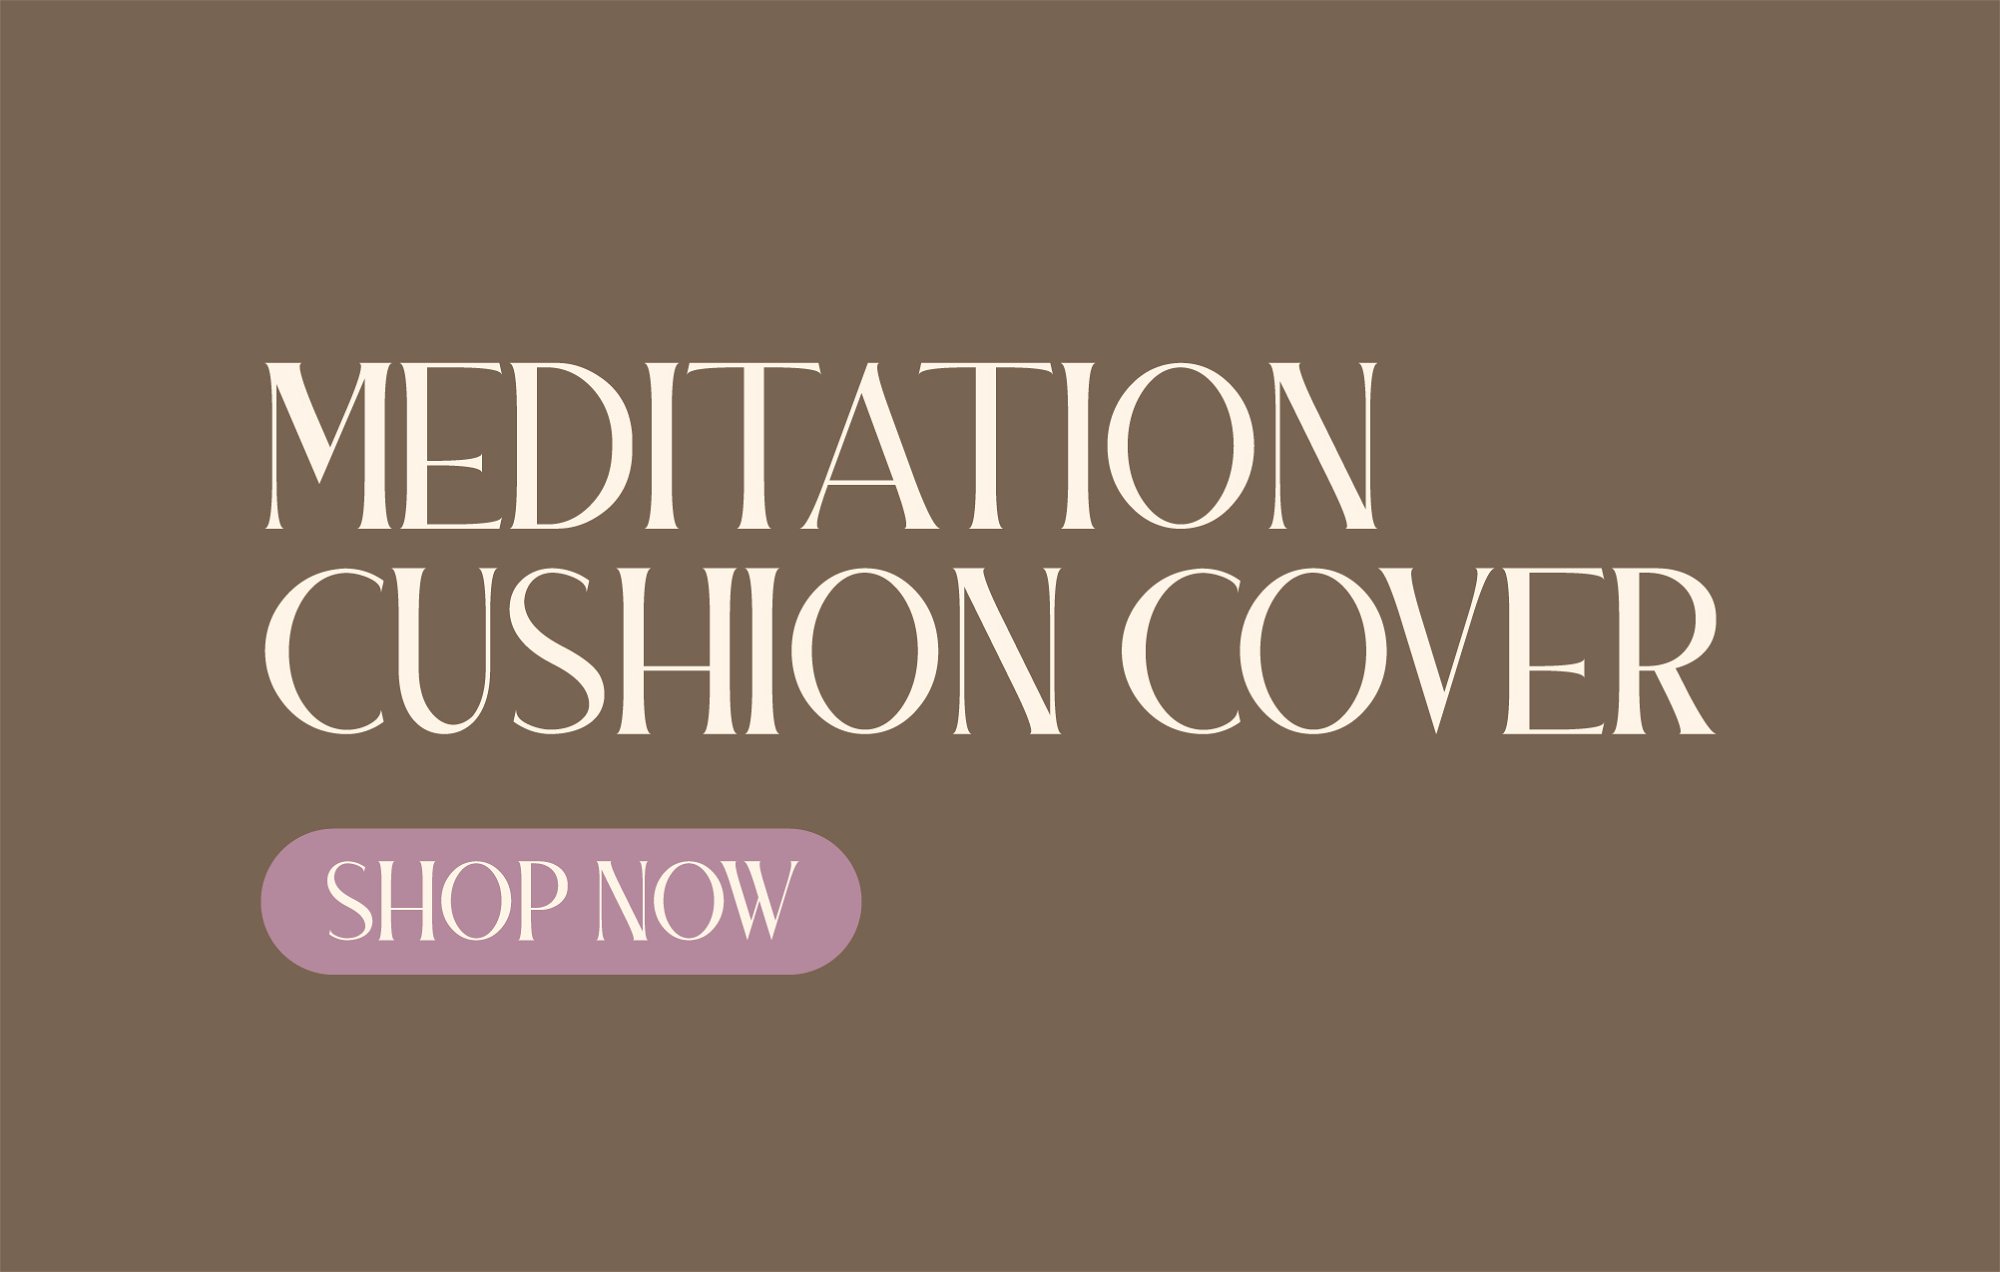 meditation cushion cover shop now